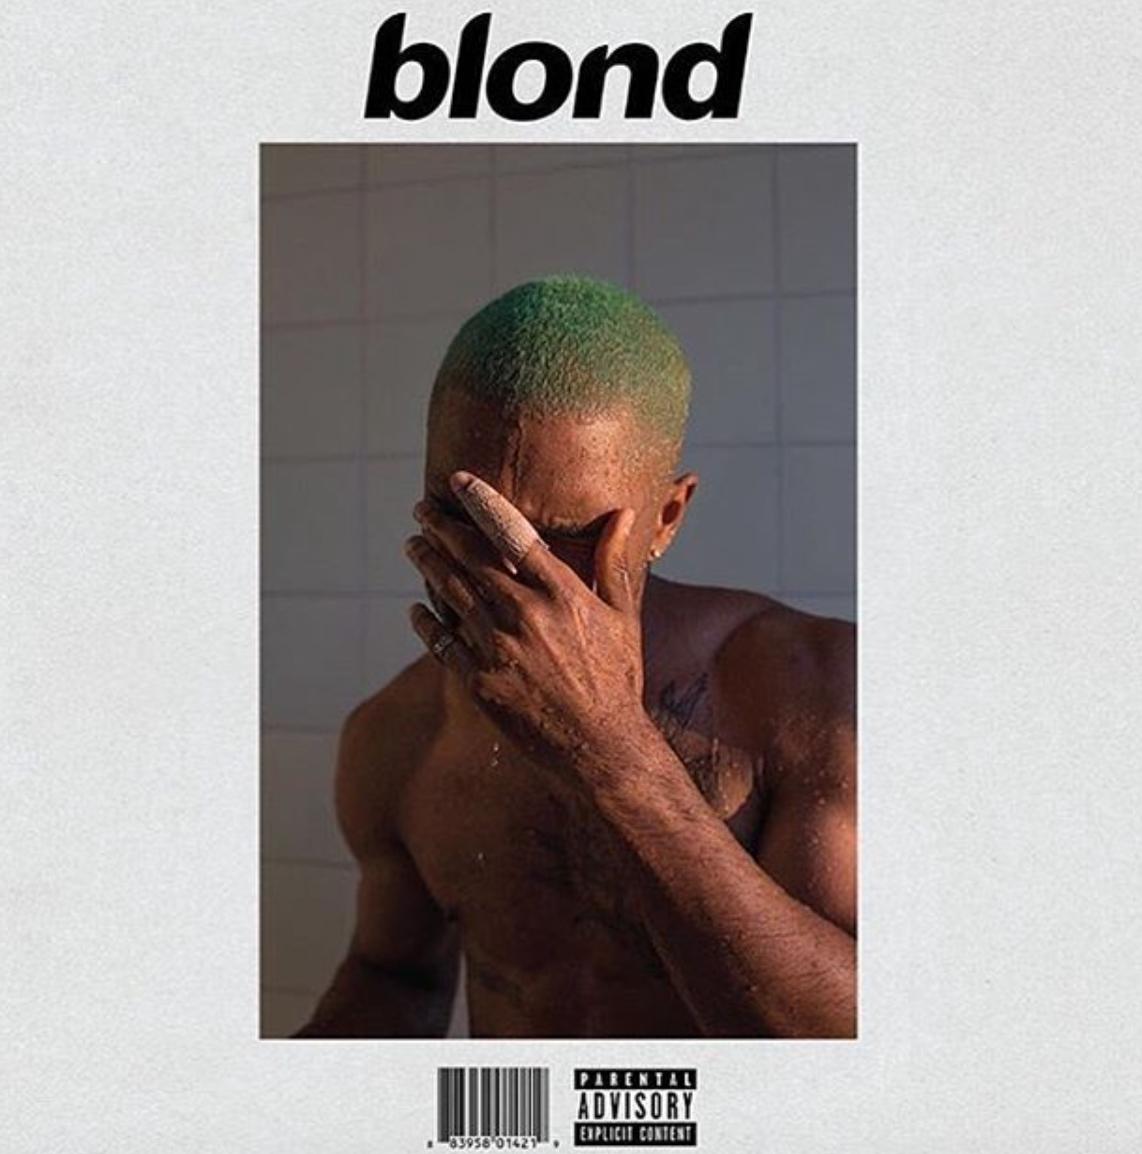 frank ocean blonde album cover painting